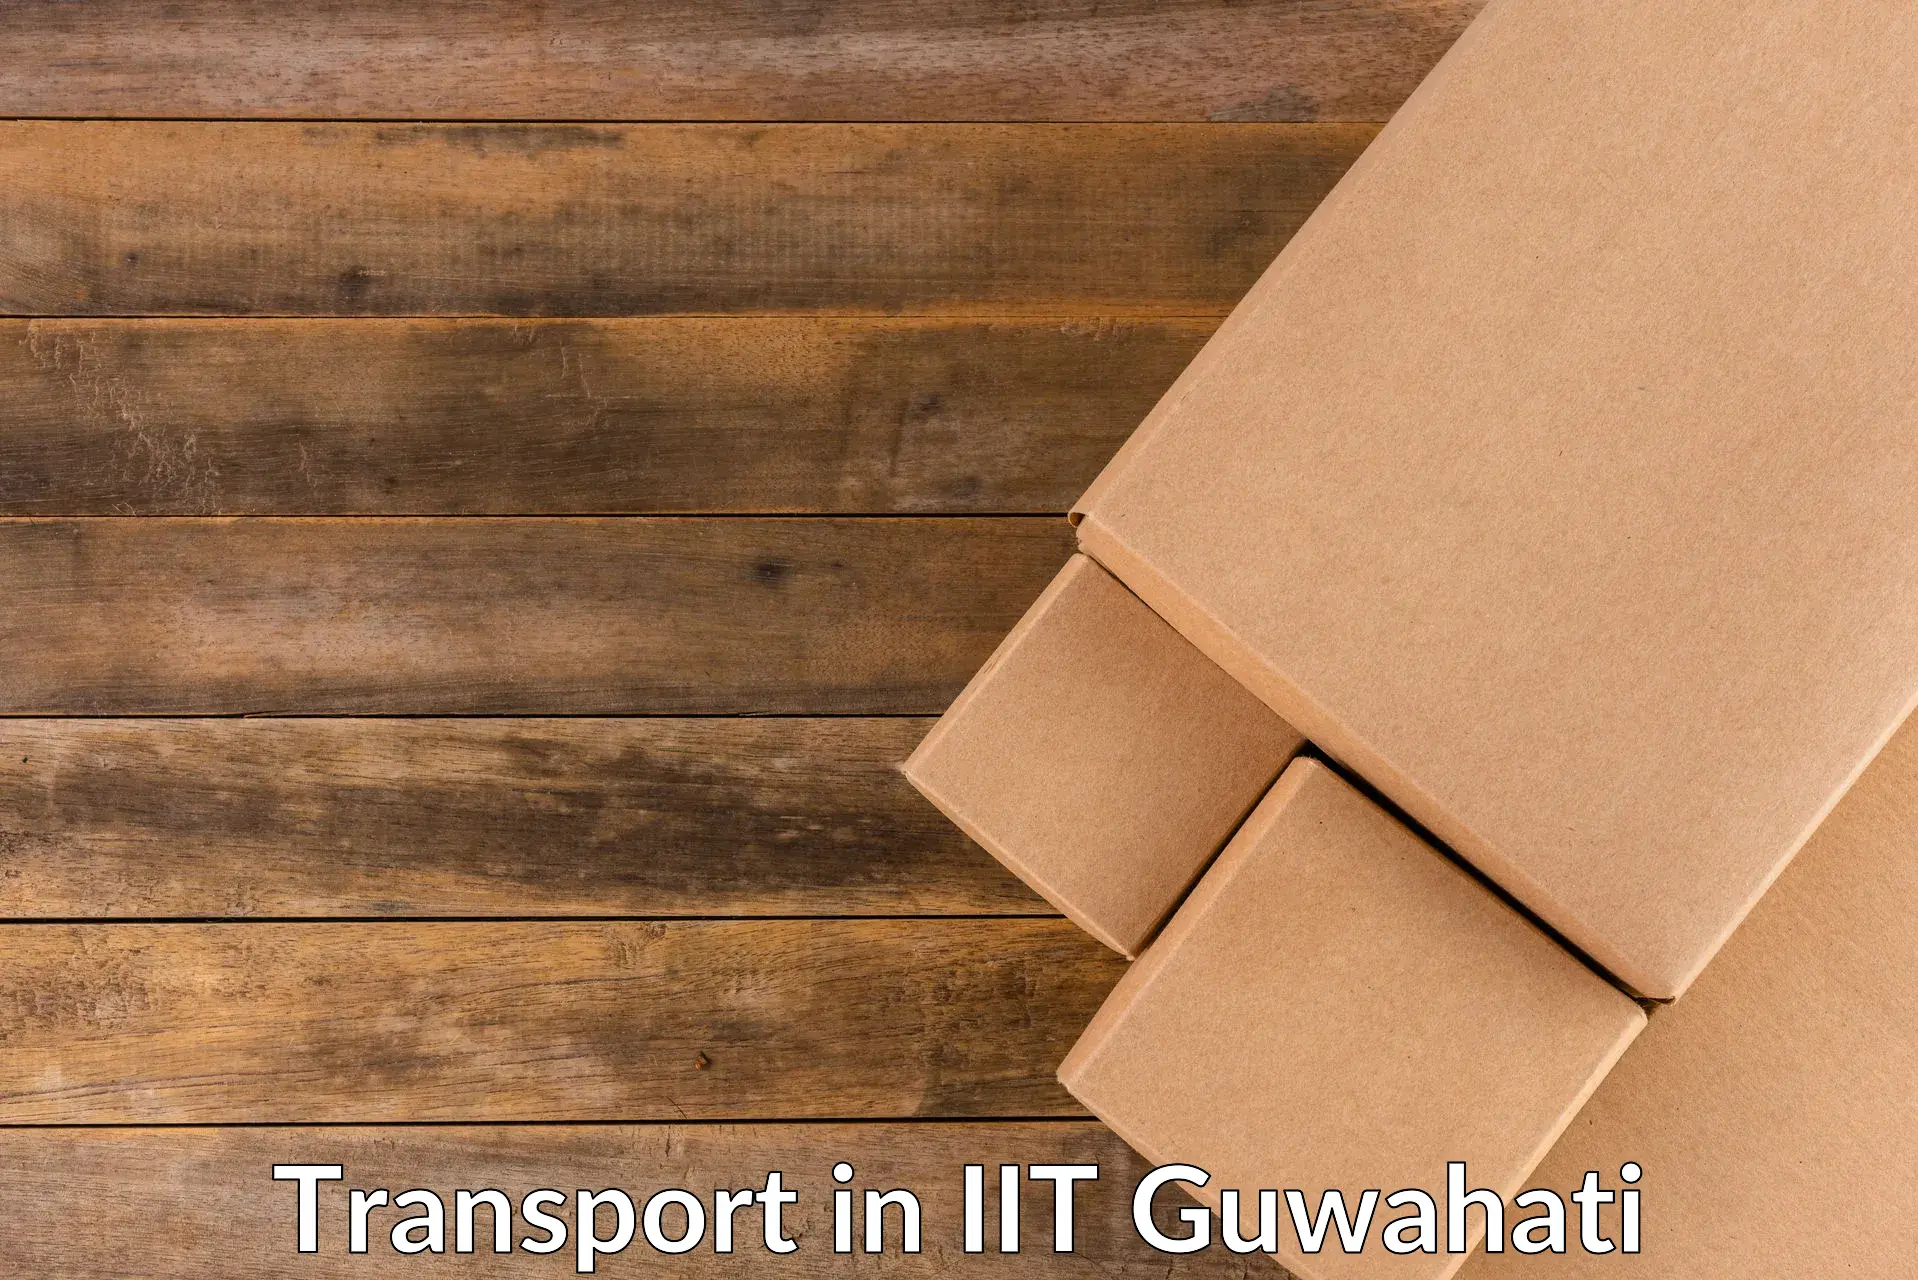 Cargo transport services in IIT Guwahati